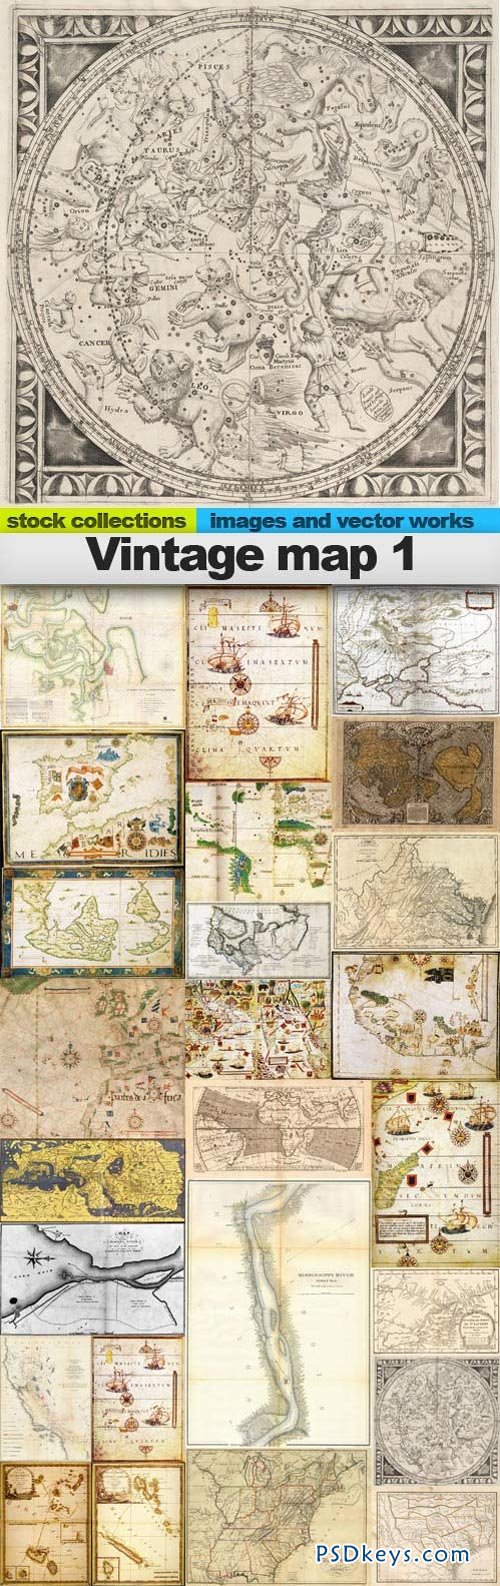 Vintage map 1 25xUHQ JPEG